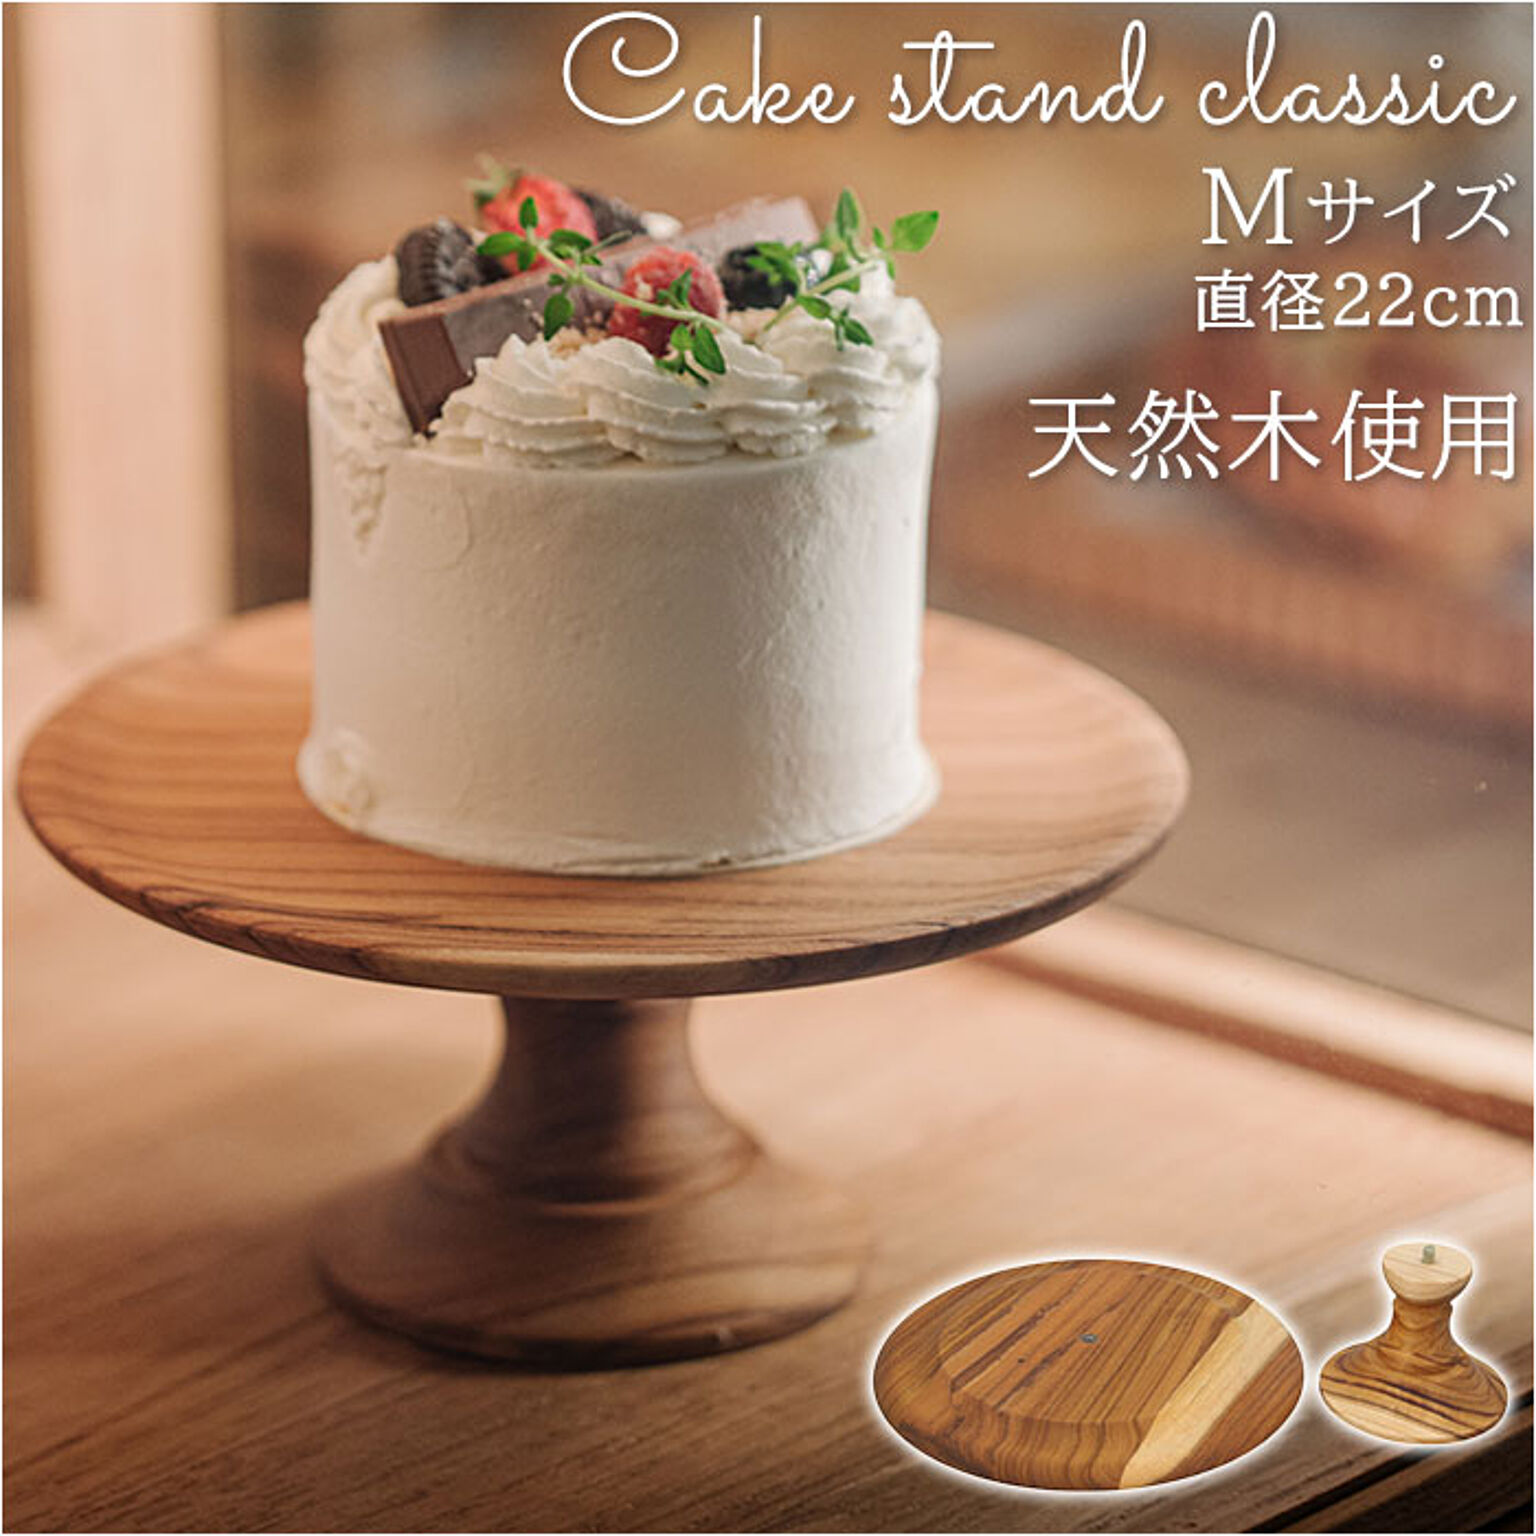 Cake stand classic M